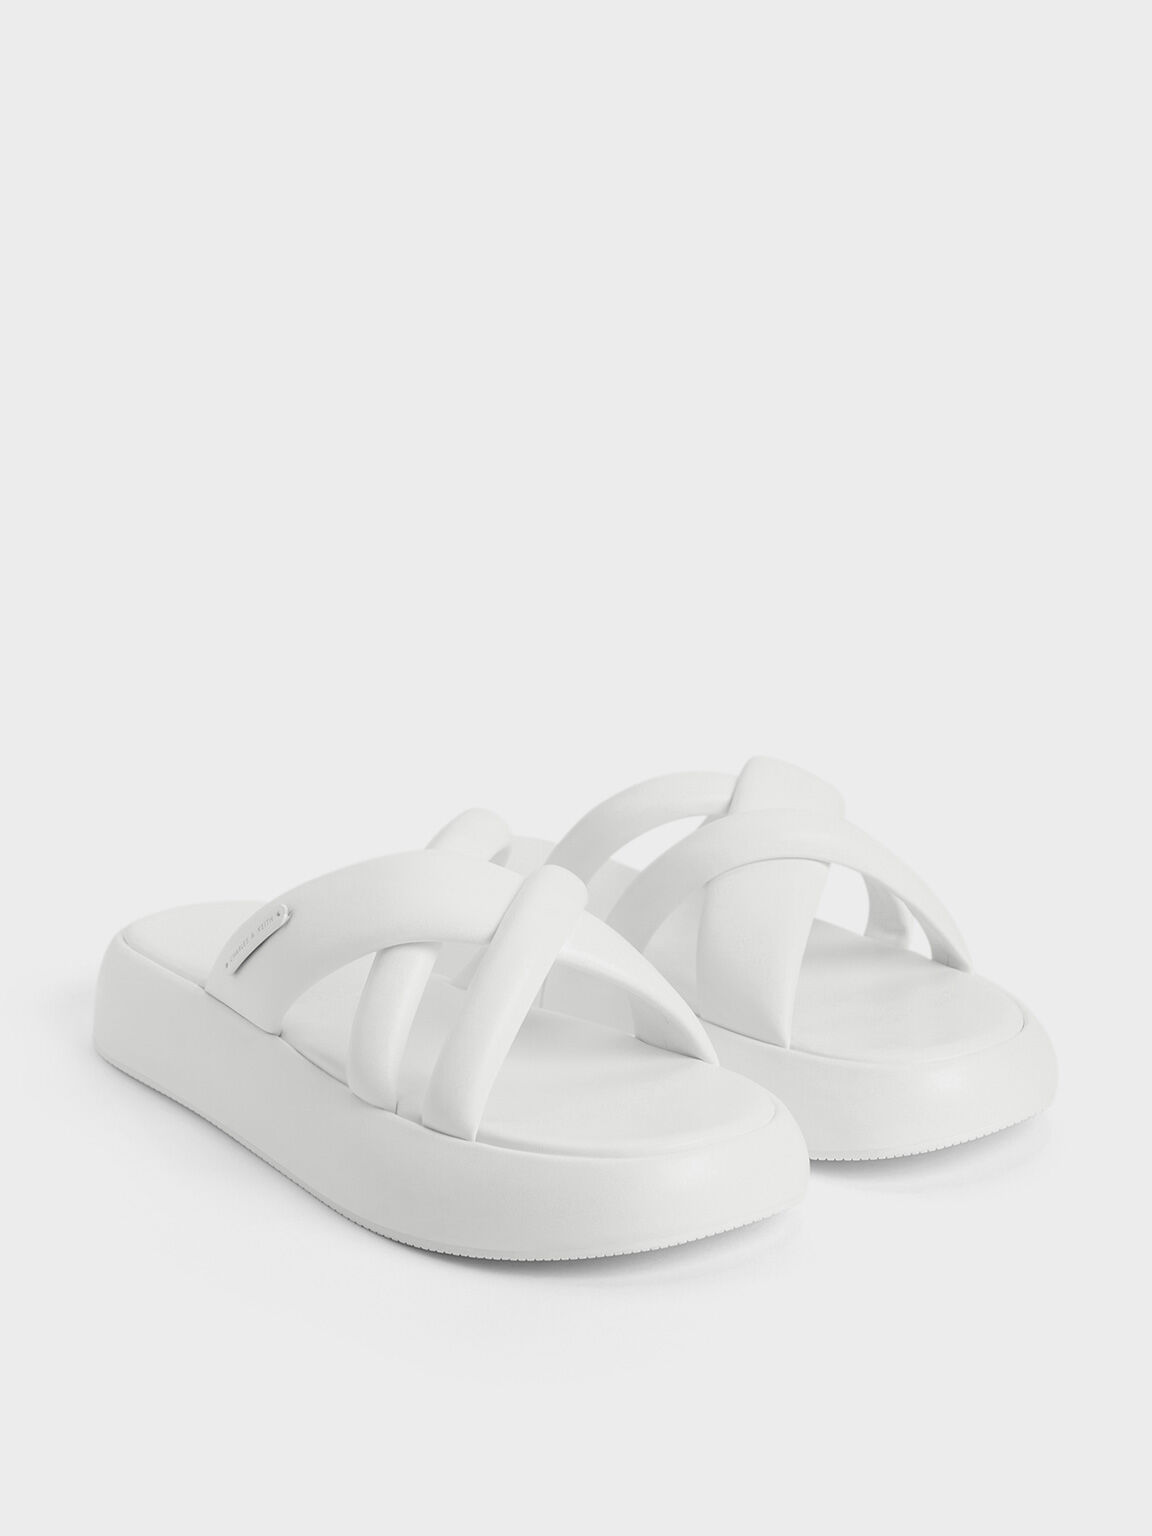 Puffy Crossover-Strap Slide Sandals, White, hi-res